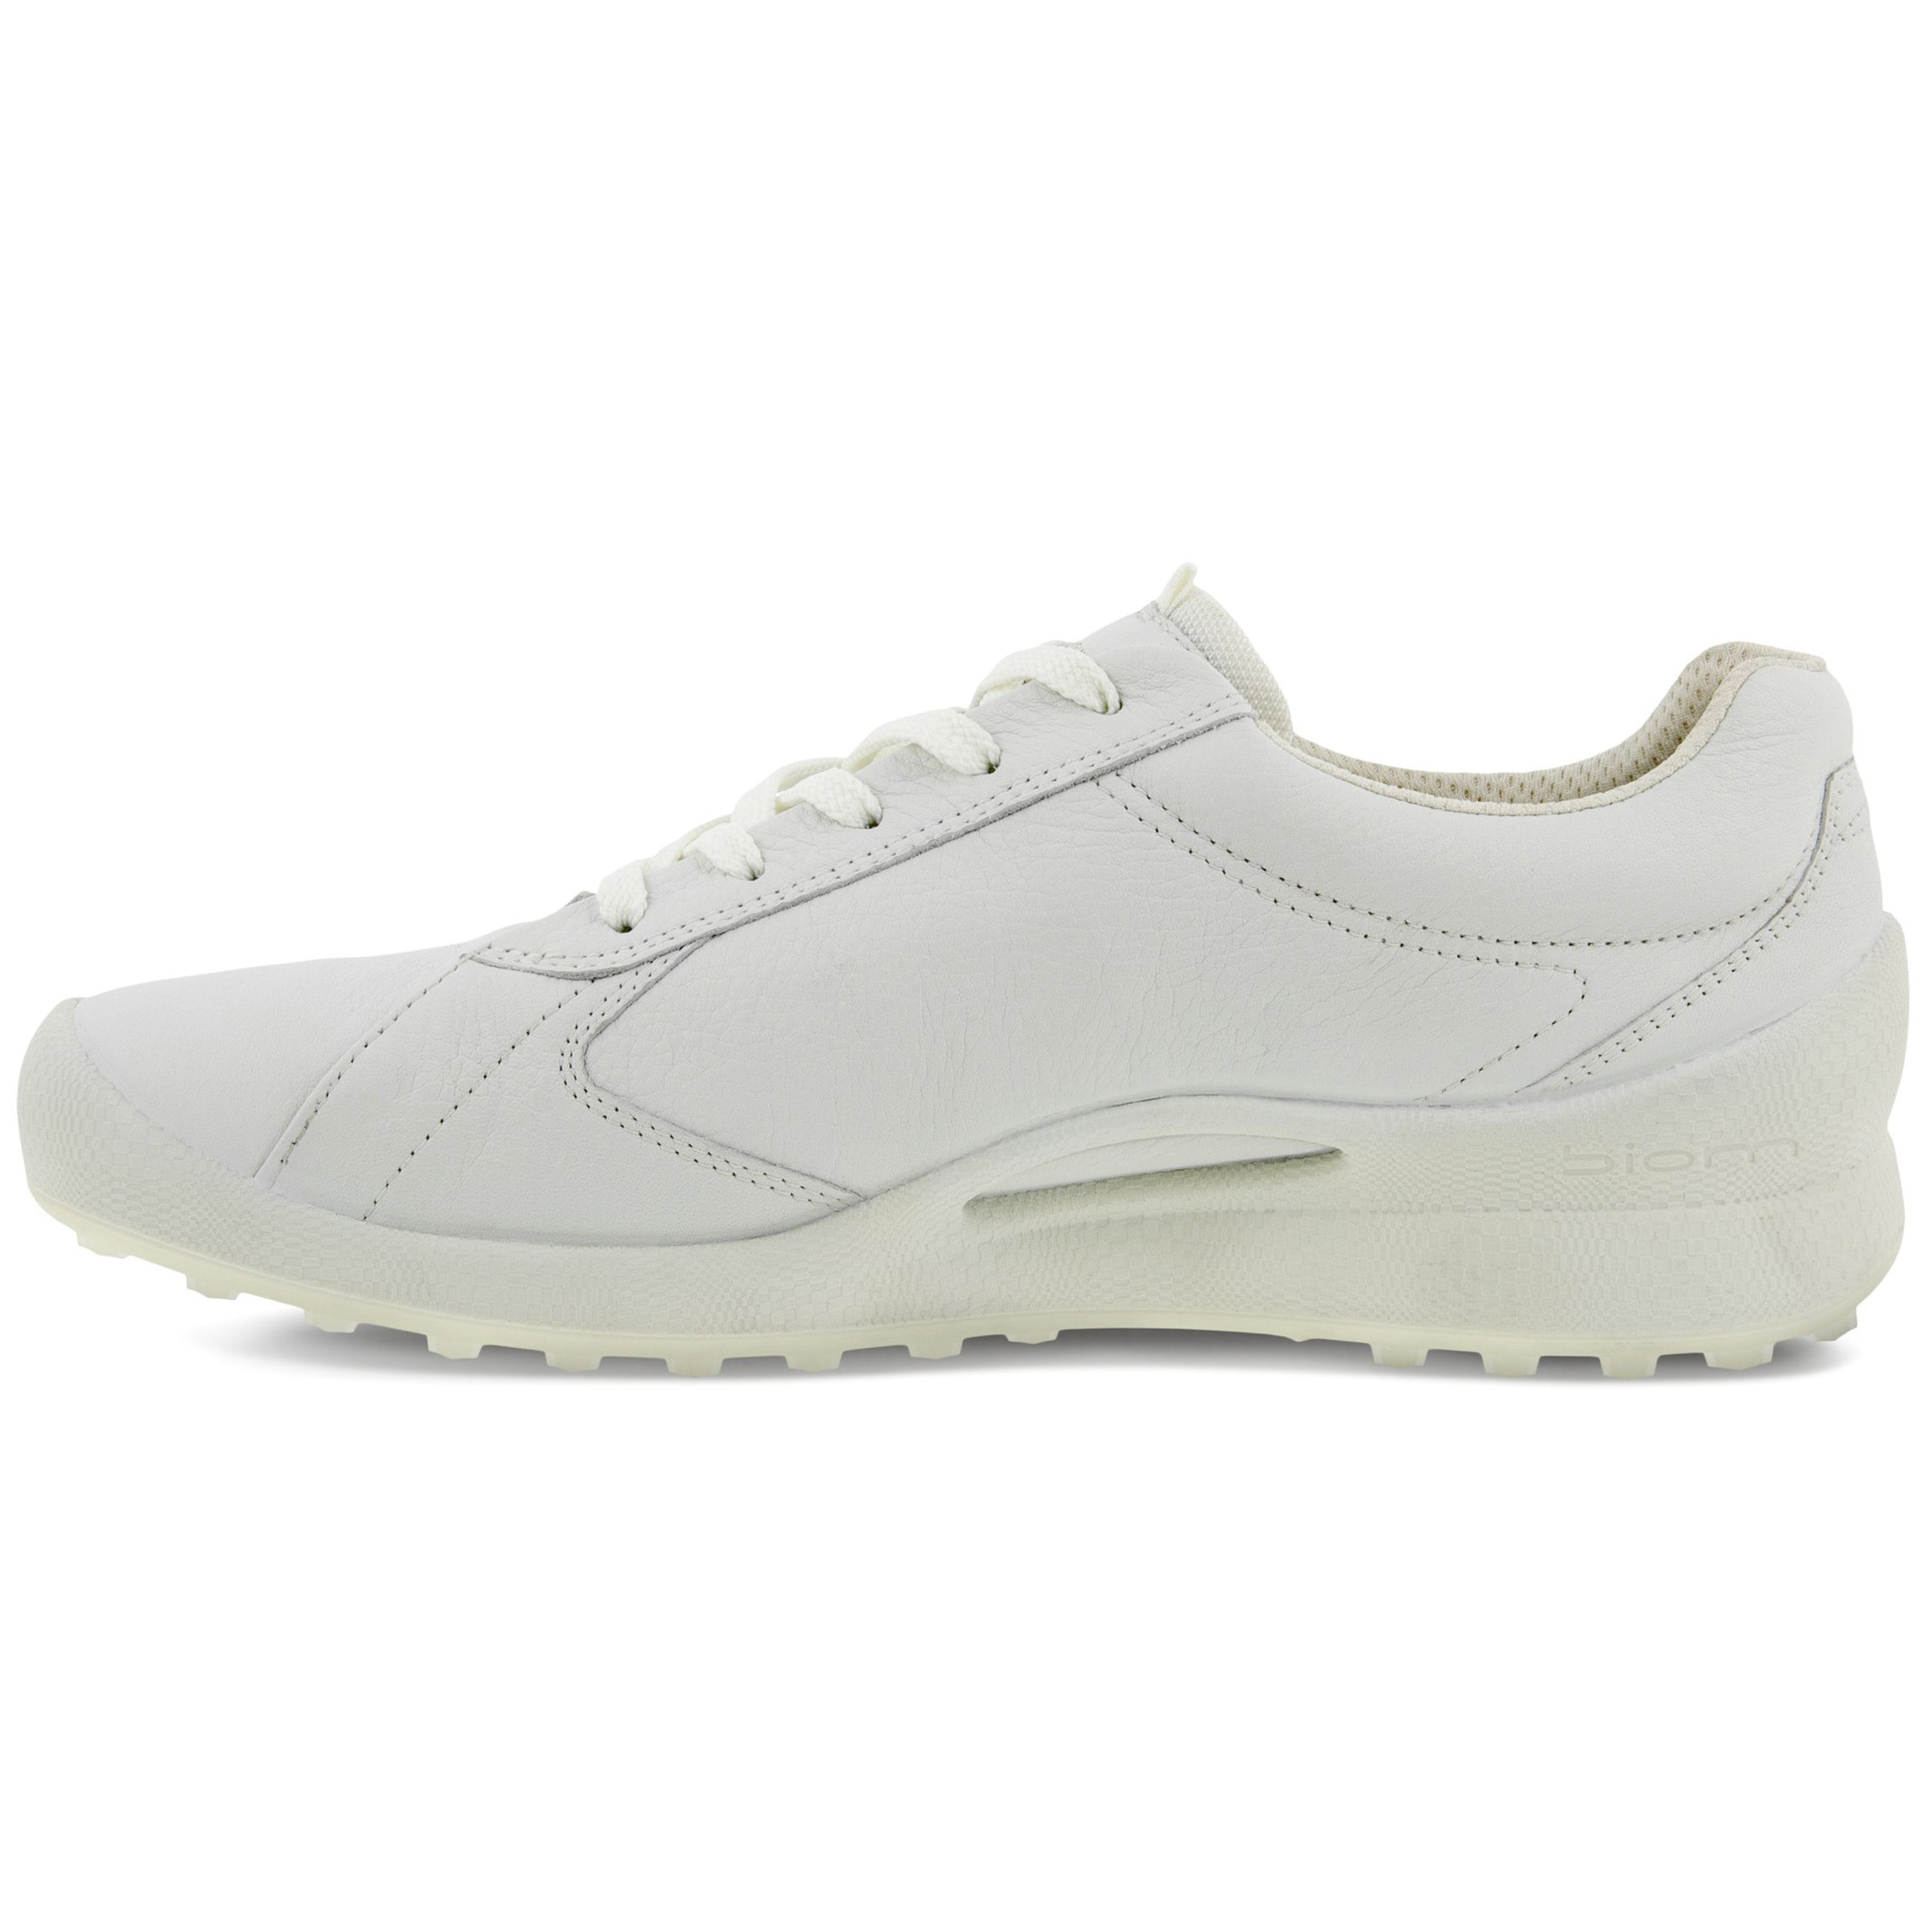 Samarbejde Glamour knap Ecco Biom Hybrid Golf Shoes 131654 01007 White | Function18